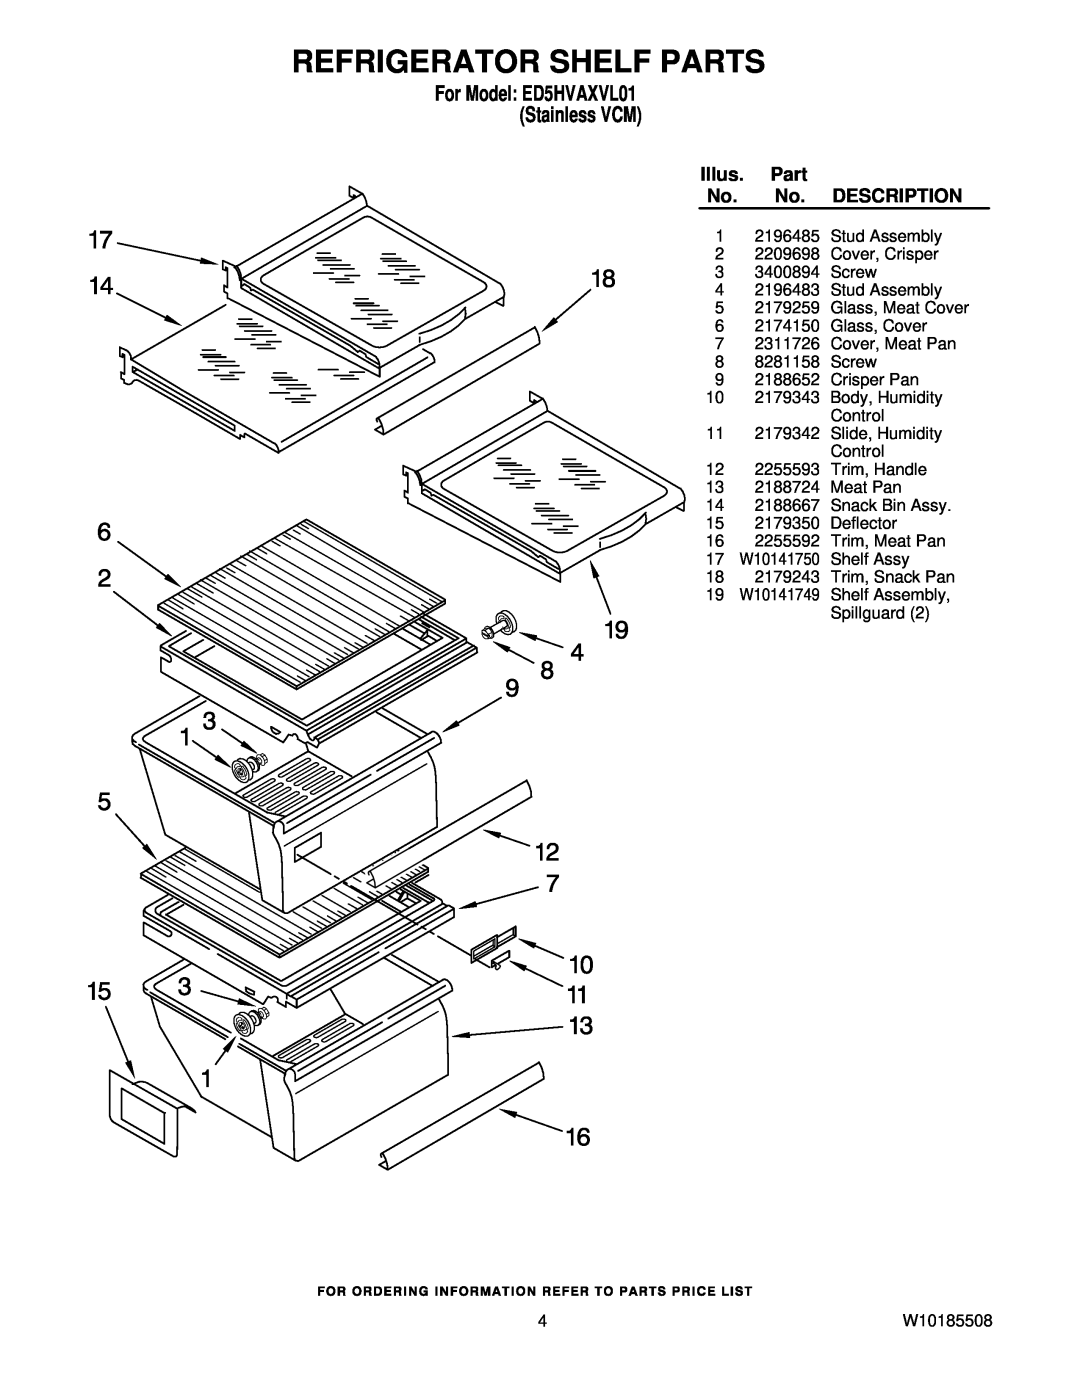 Whirlpool manual Refrigerator Shelf Parts, Illus. Part, For Model ED5HVAXVL01 Stainless VCM, Description 